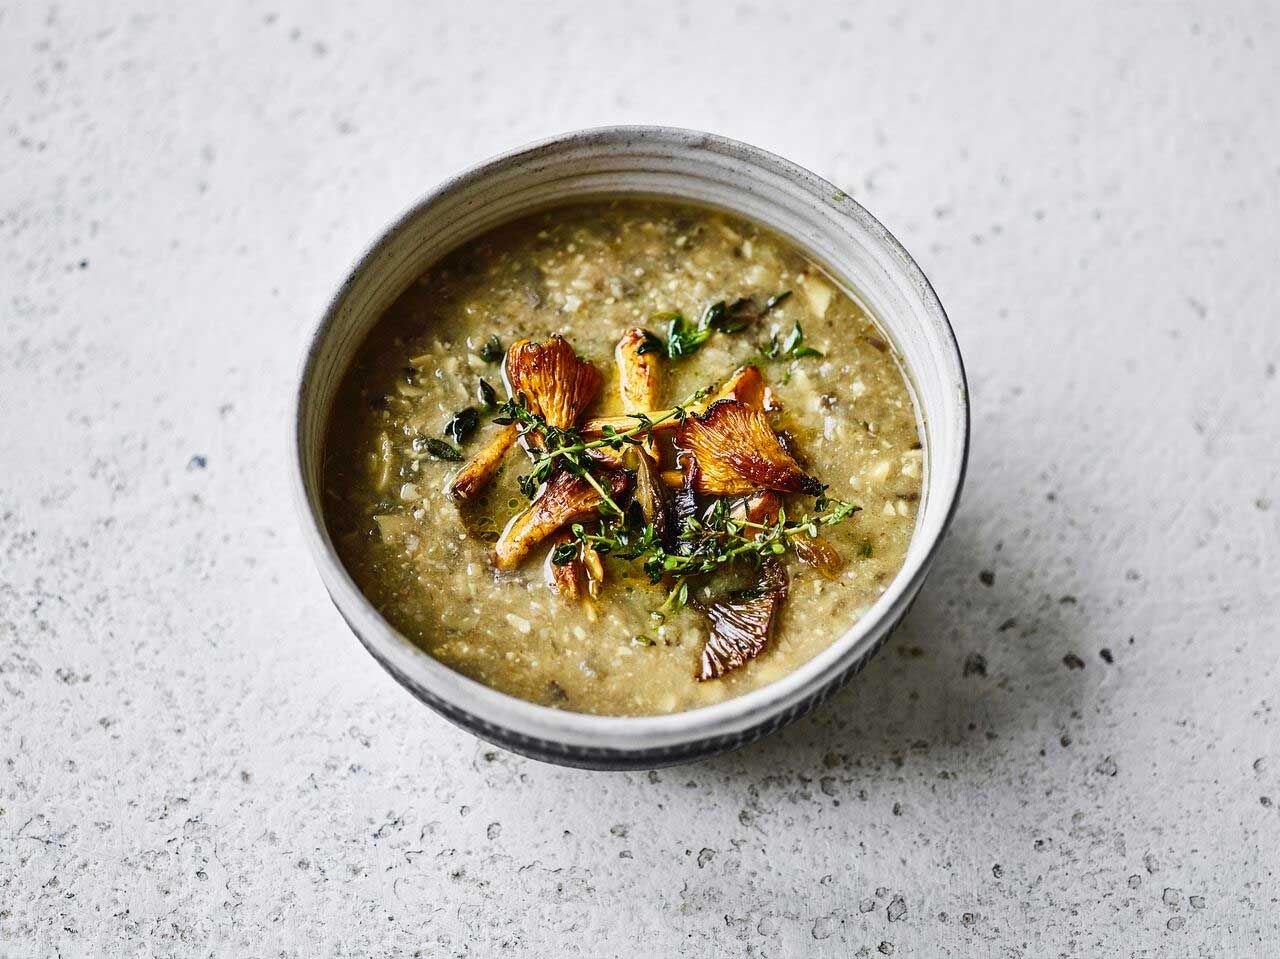 Amelia Freer's 10 recipes for nourishing your body this January - Mushroom soup - Humphrey Munson 